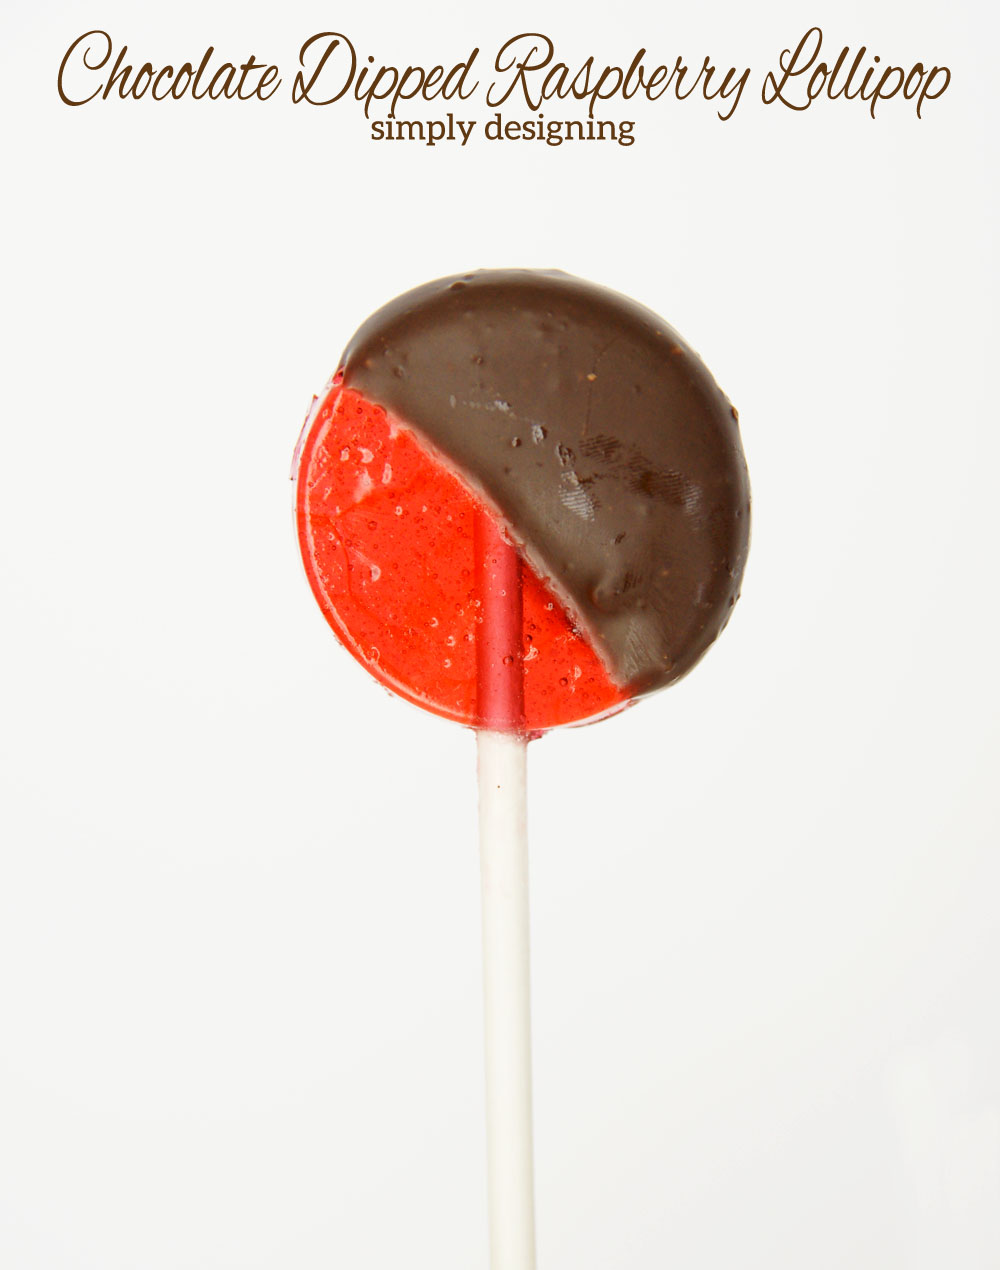 Chocolate Dipped Raspberry Lollipops | #candy #recipe #lollipop